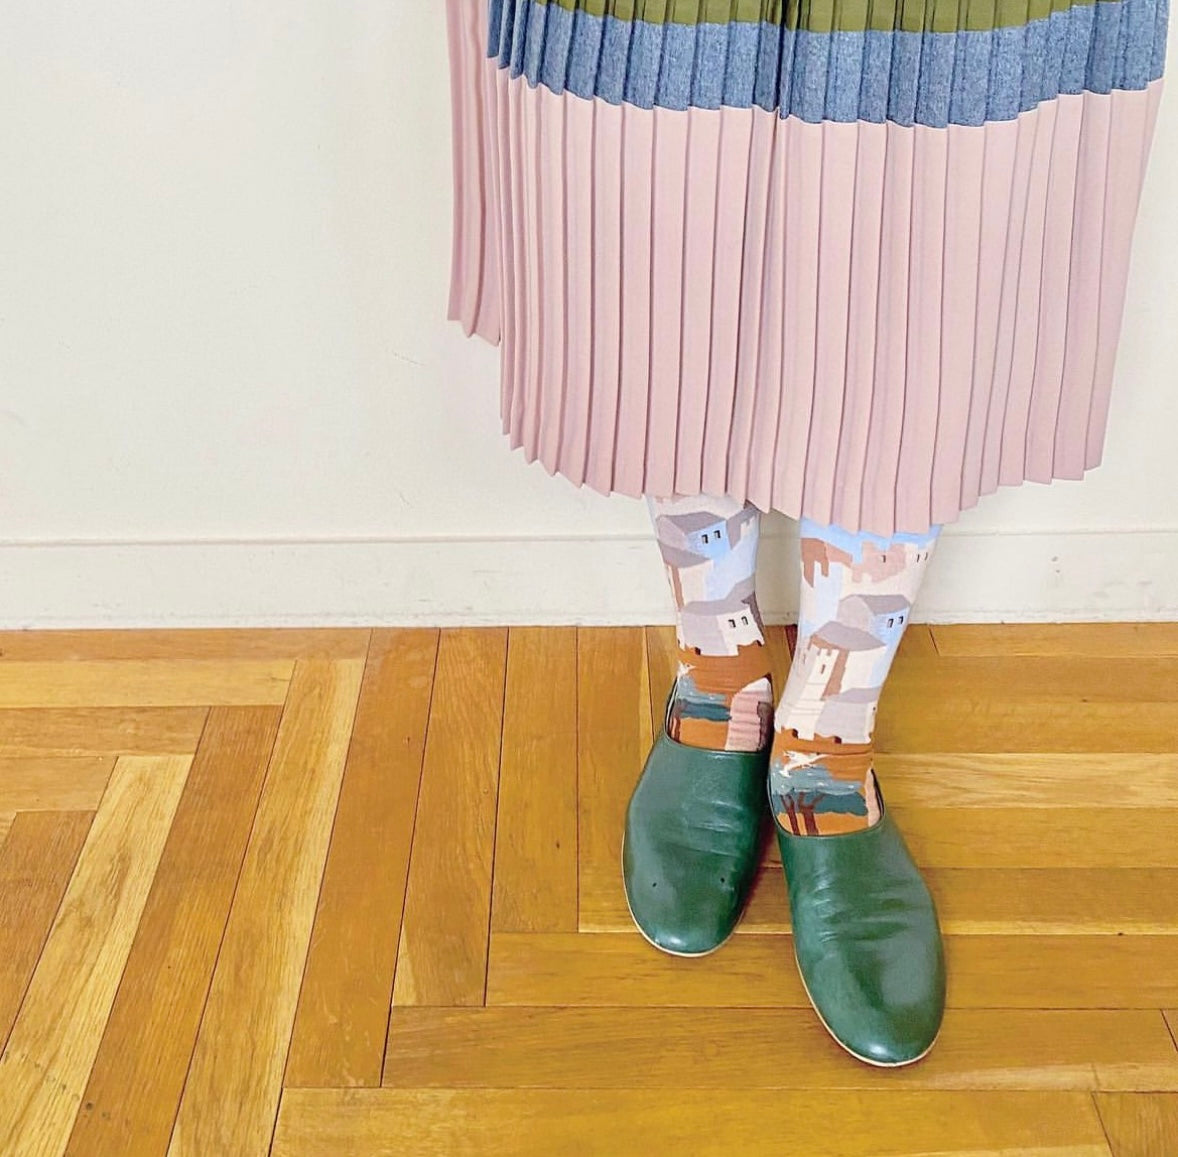 Bonne Maison Socks with Patterns 02